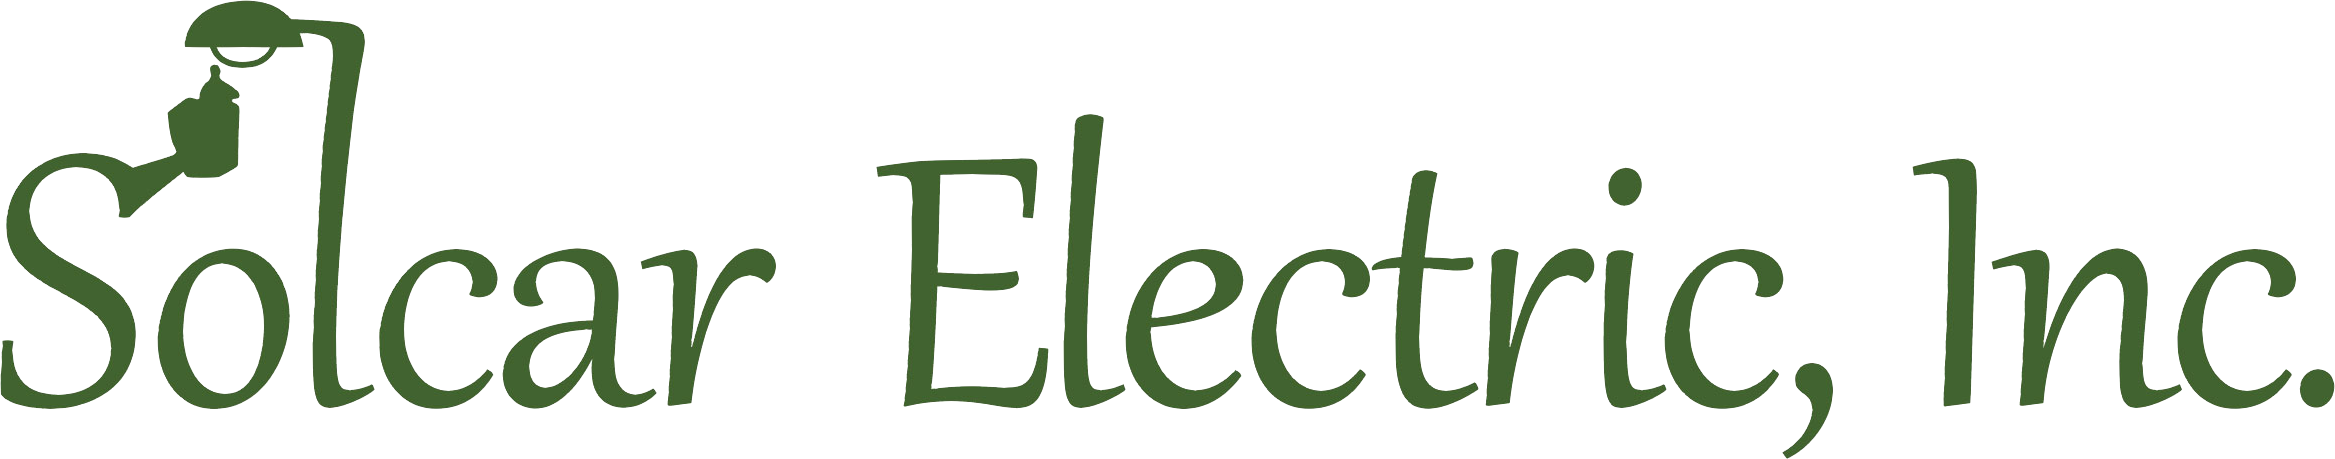 Solcar Electric Inc. logo